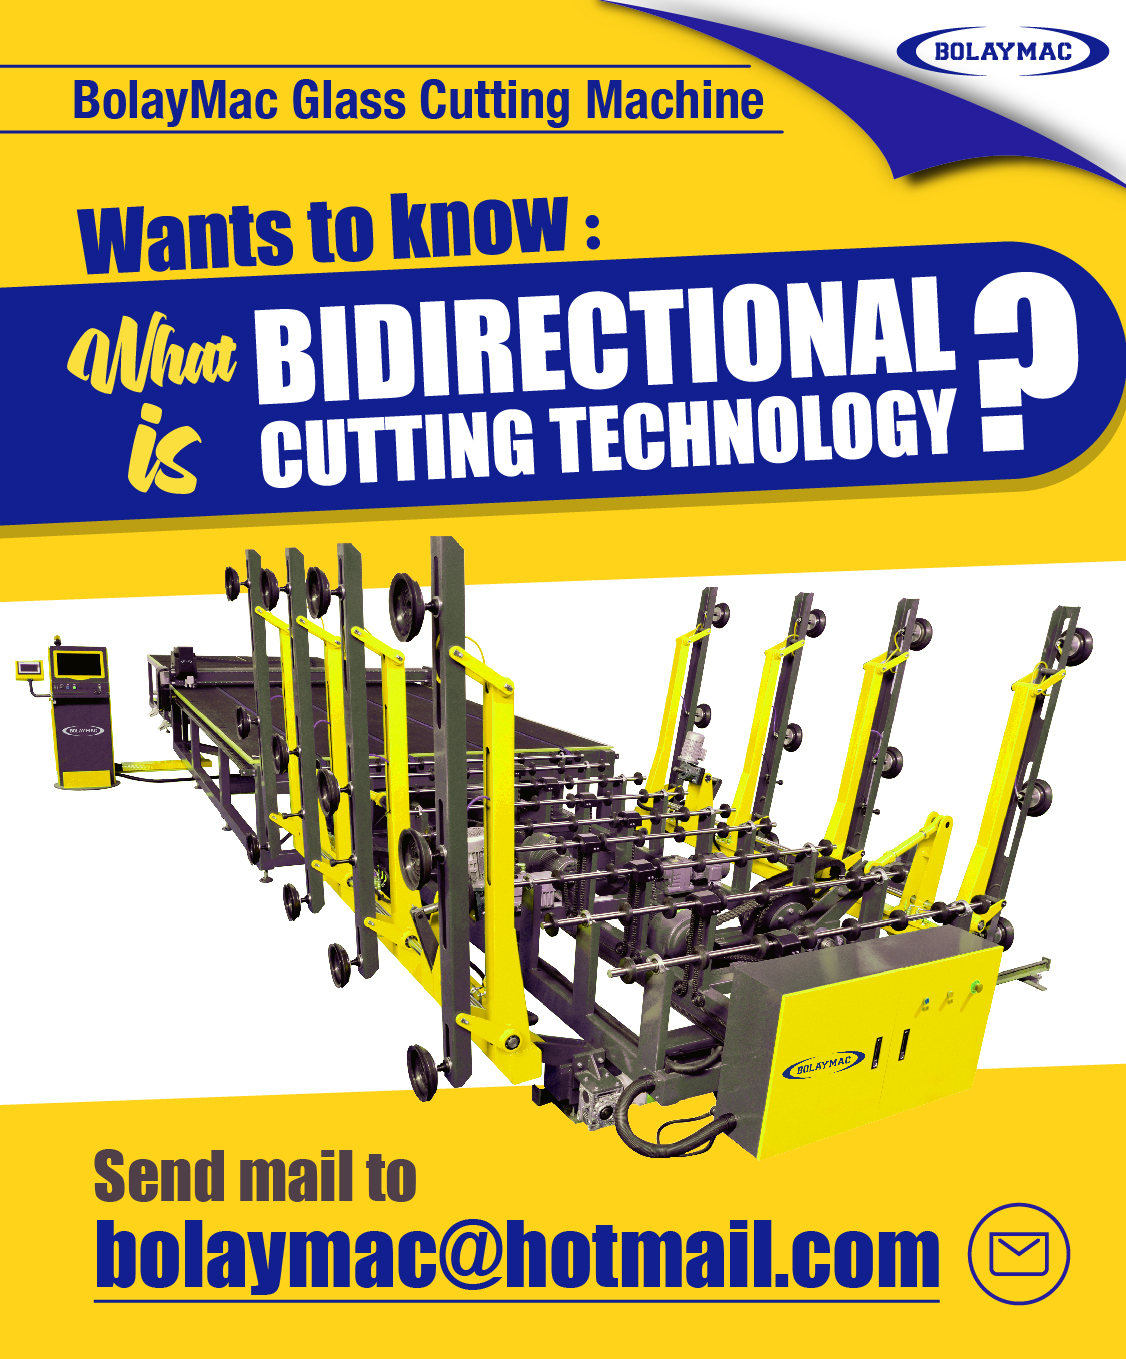 Bidirectional cutting technology